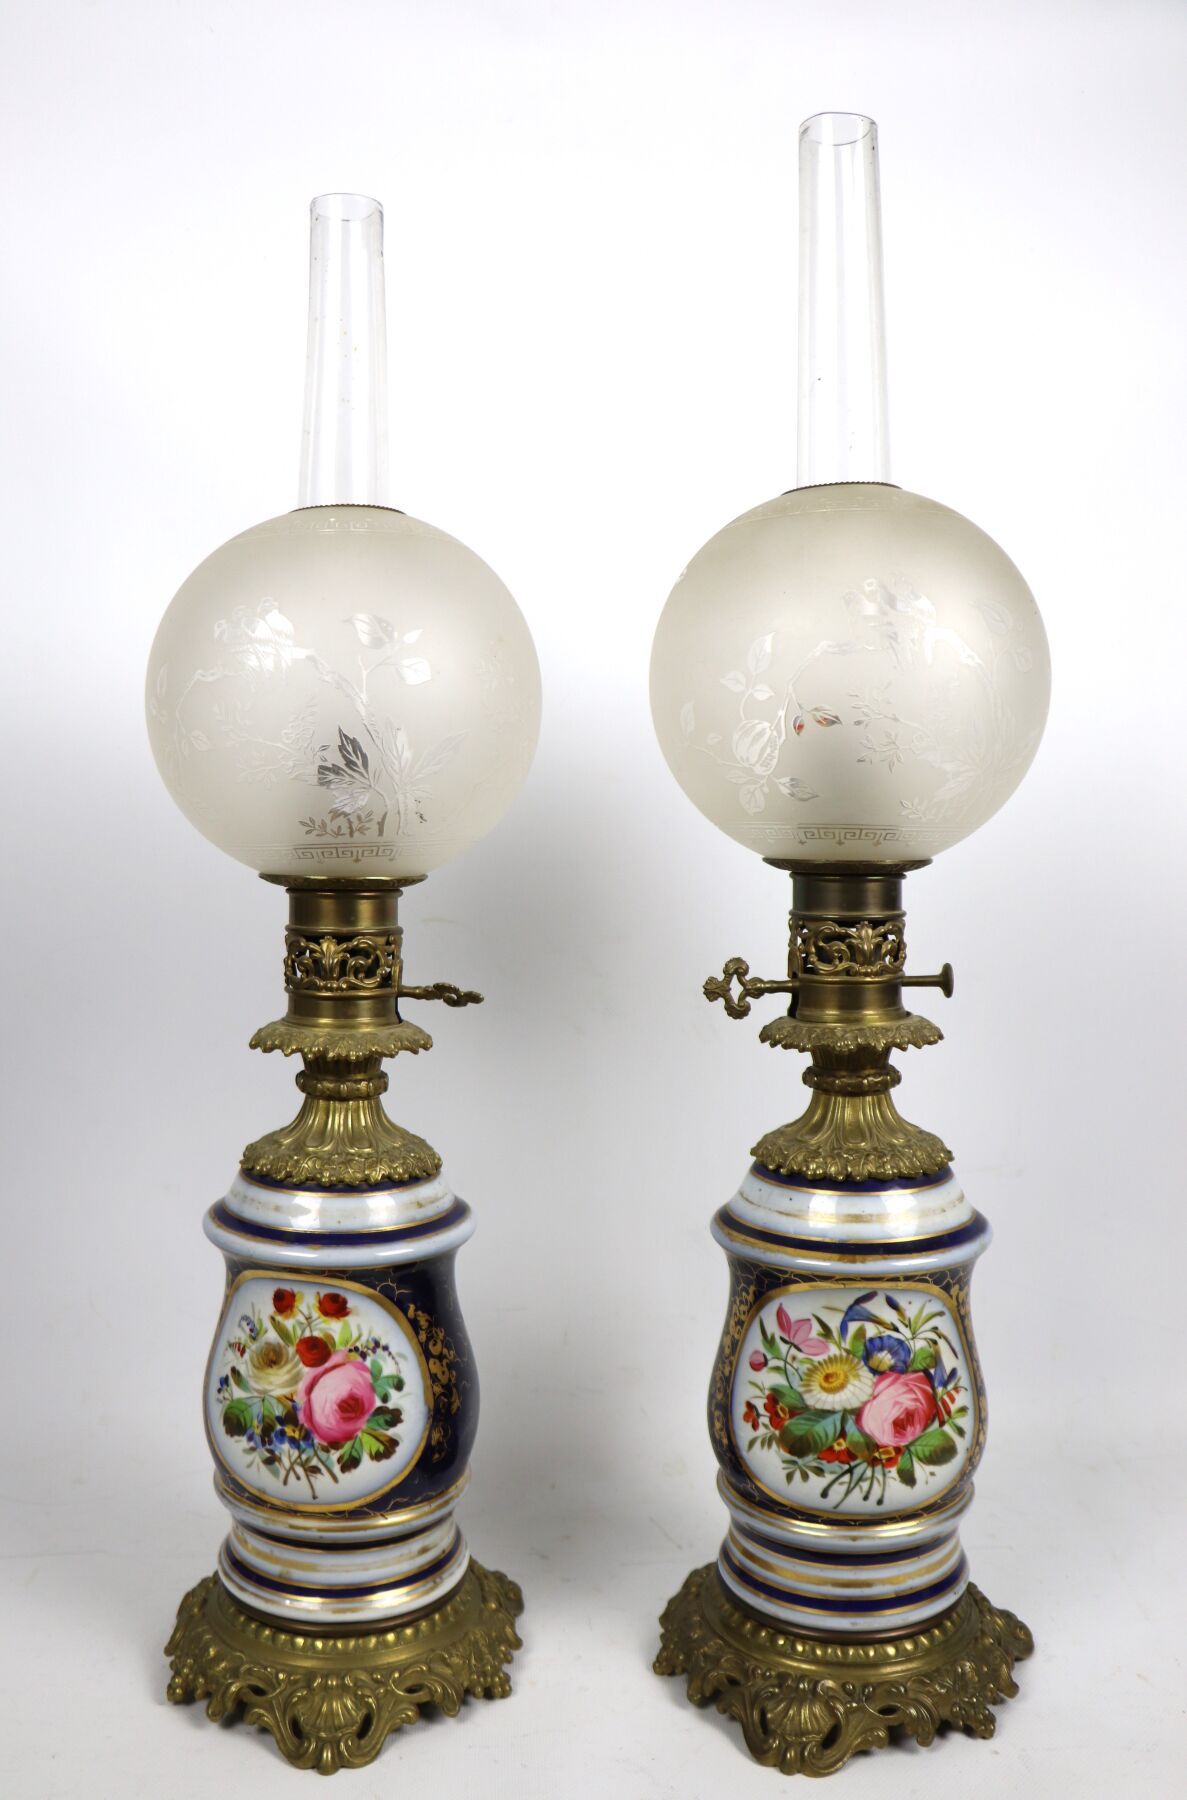 Null 巴伦丁或巴耶夫。
一对瓷器油灯，花卉装饰用黄金加强，球体装饰有飞行的鸟。
鎏金的青铜支架。
拿破仑三世时期。
高_45,5厘米，高_56,5厘米（共）